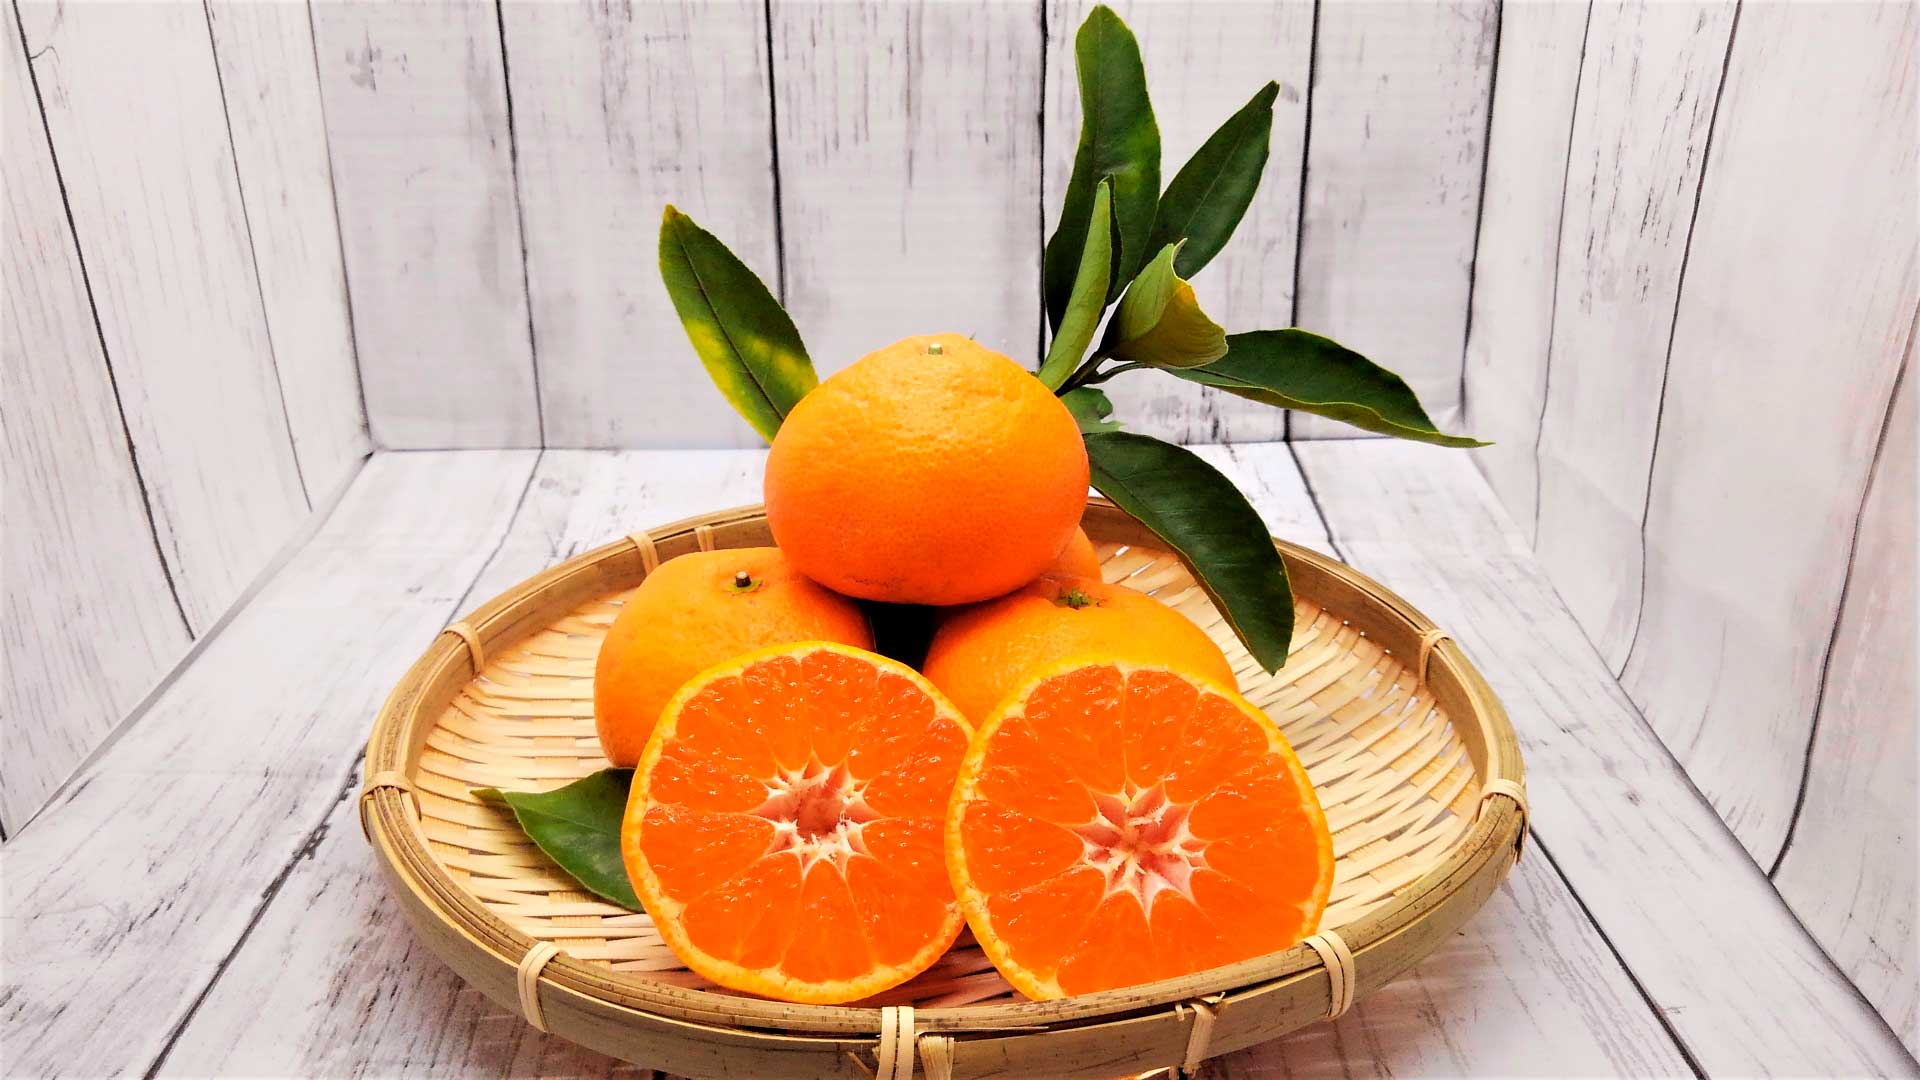 Omishima Citrus Harvest Experience